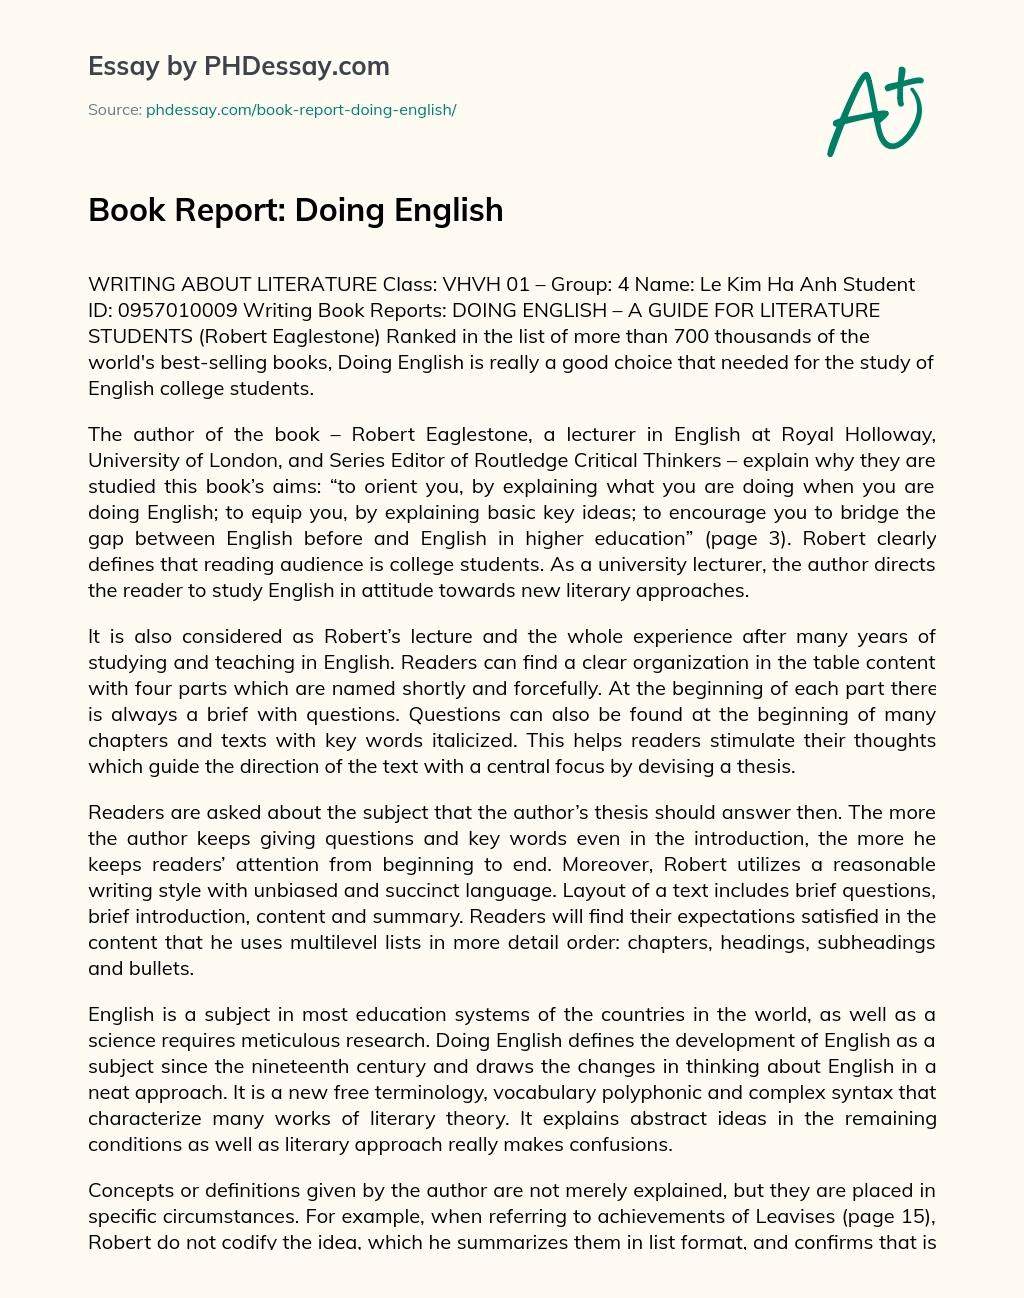 Book Report: Doing English essay